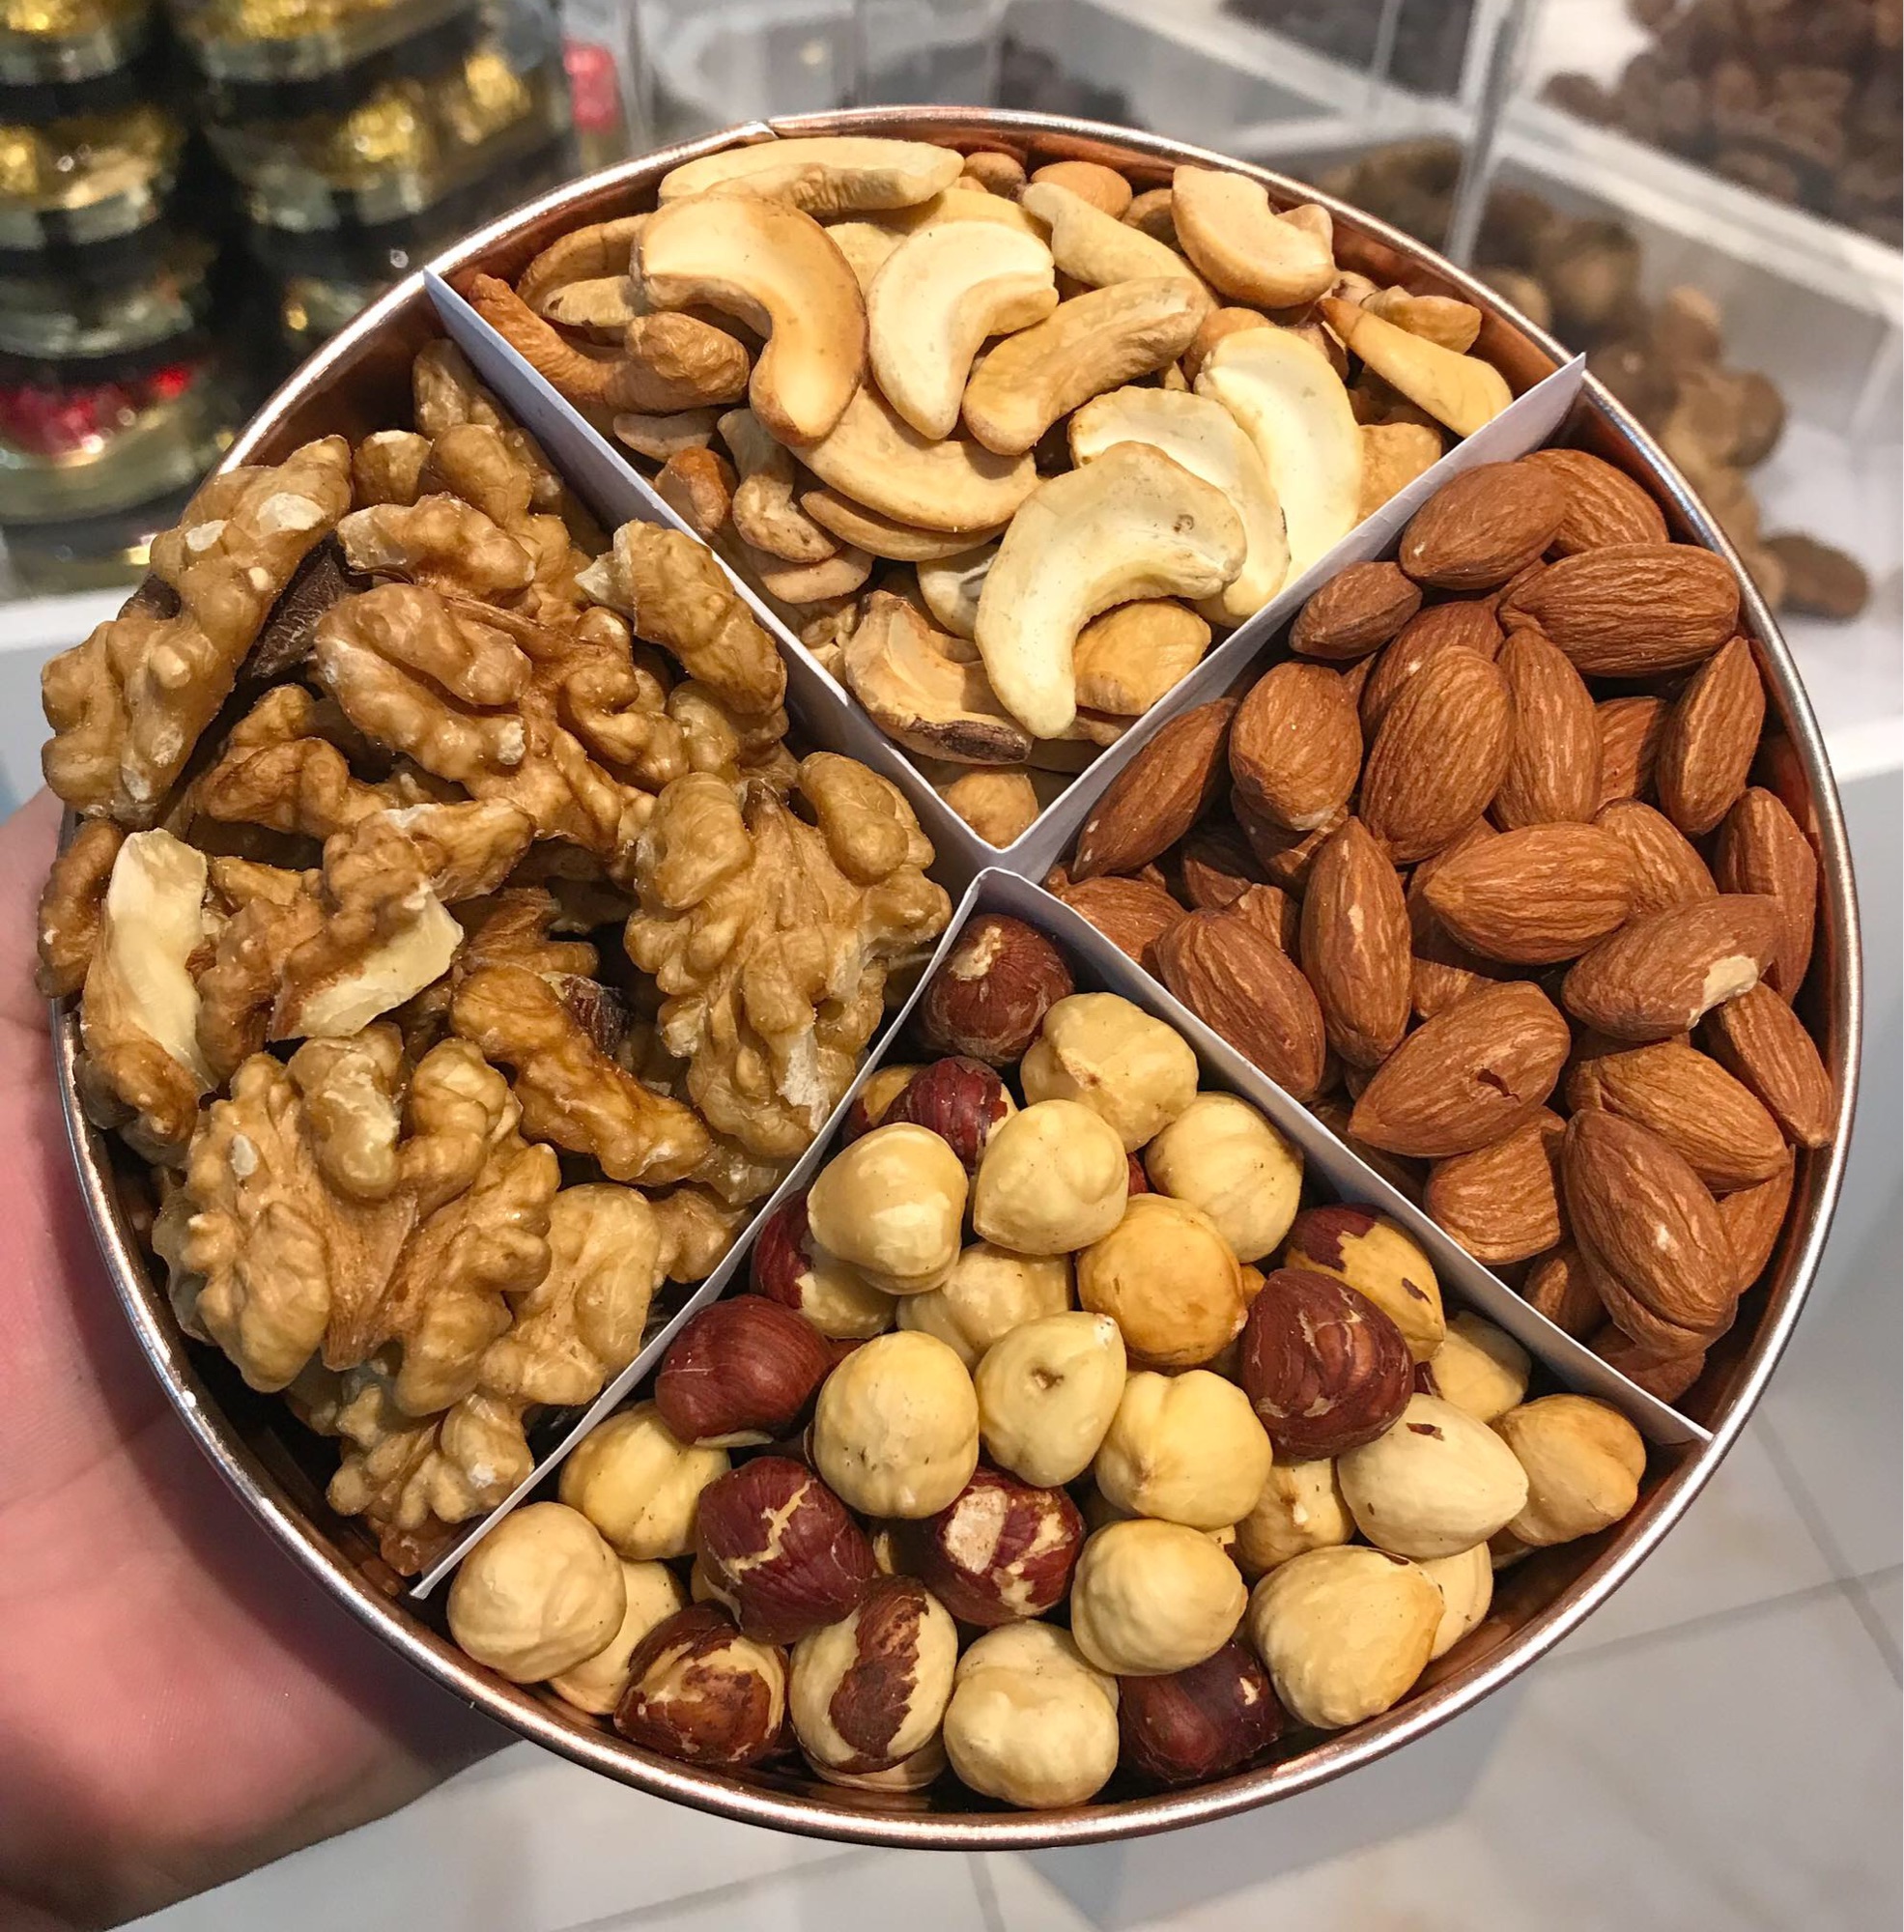 Imported Nuts Gift Box - Assorted Almonds, Walnuts, Cashews, Hazeln